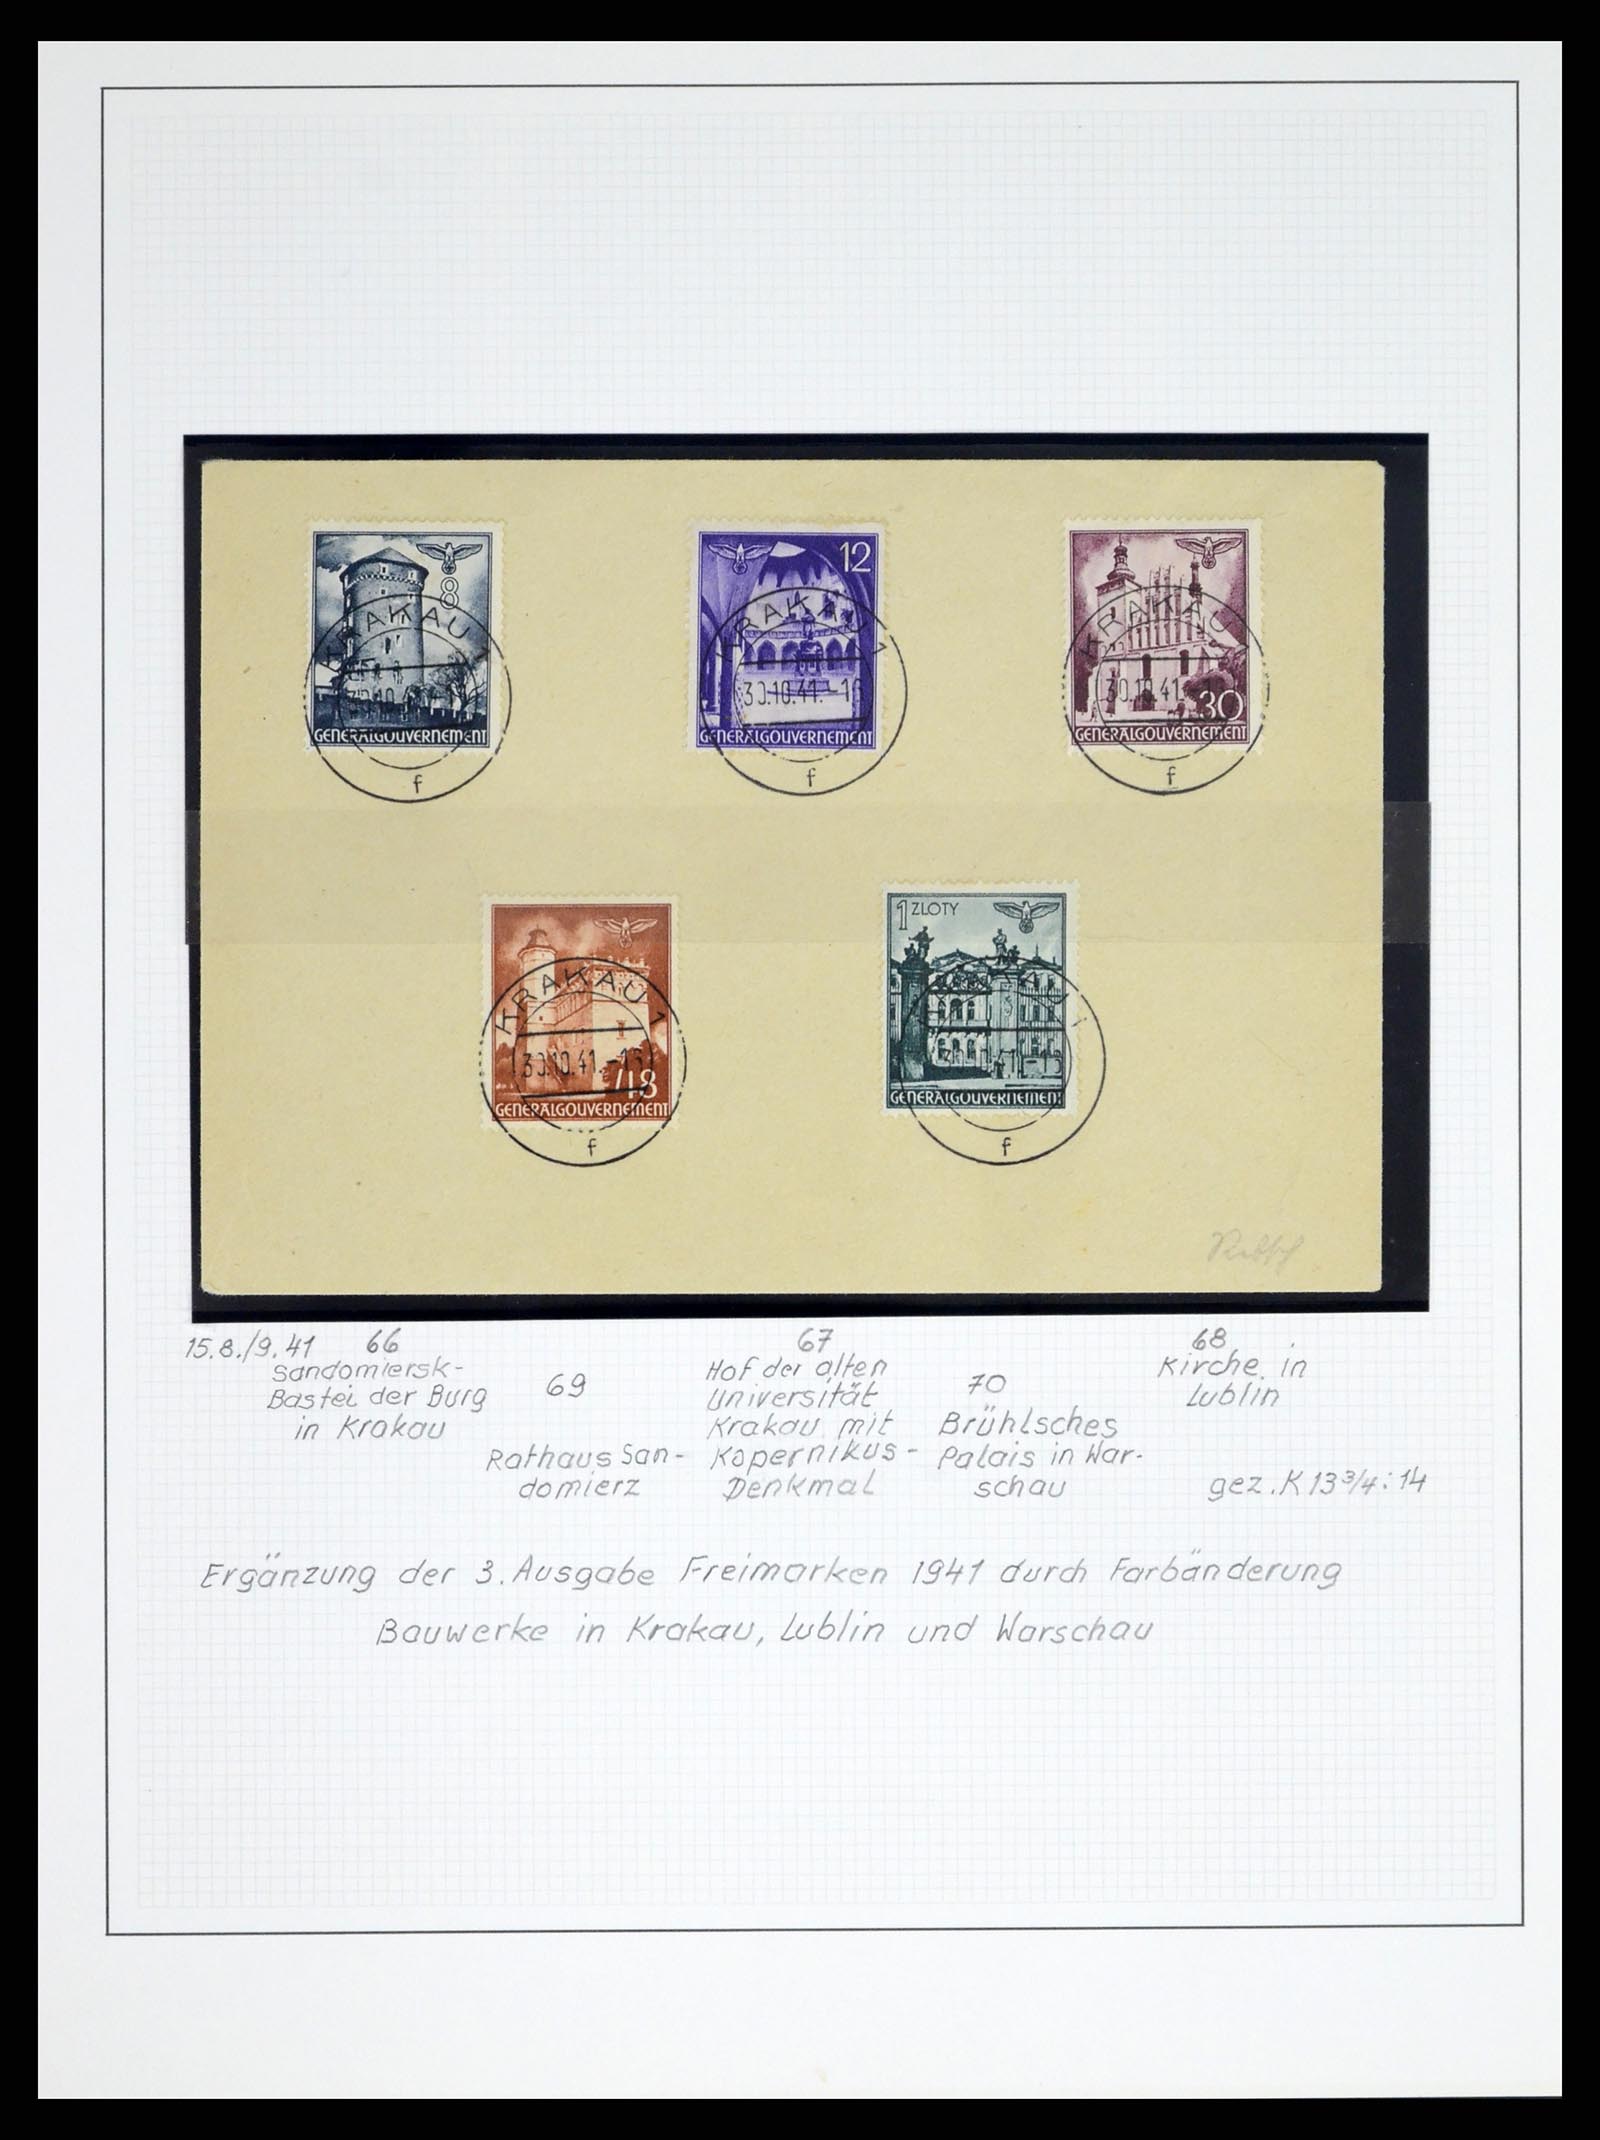 37535 168 - Stamp collection 37535 German occupation second worldwar 1939-1945.